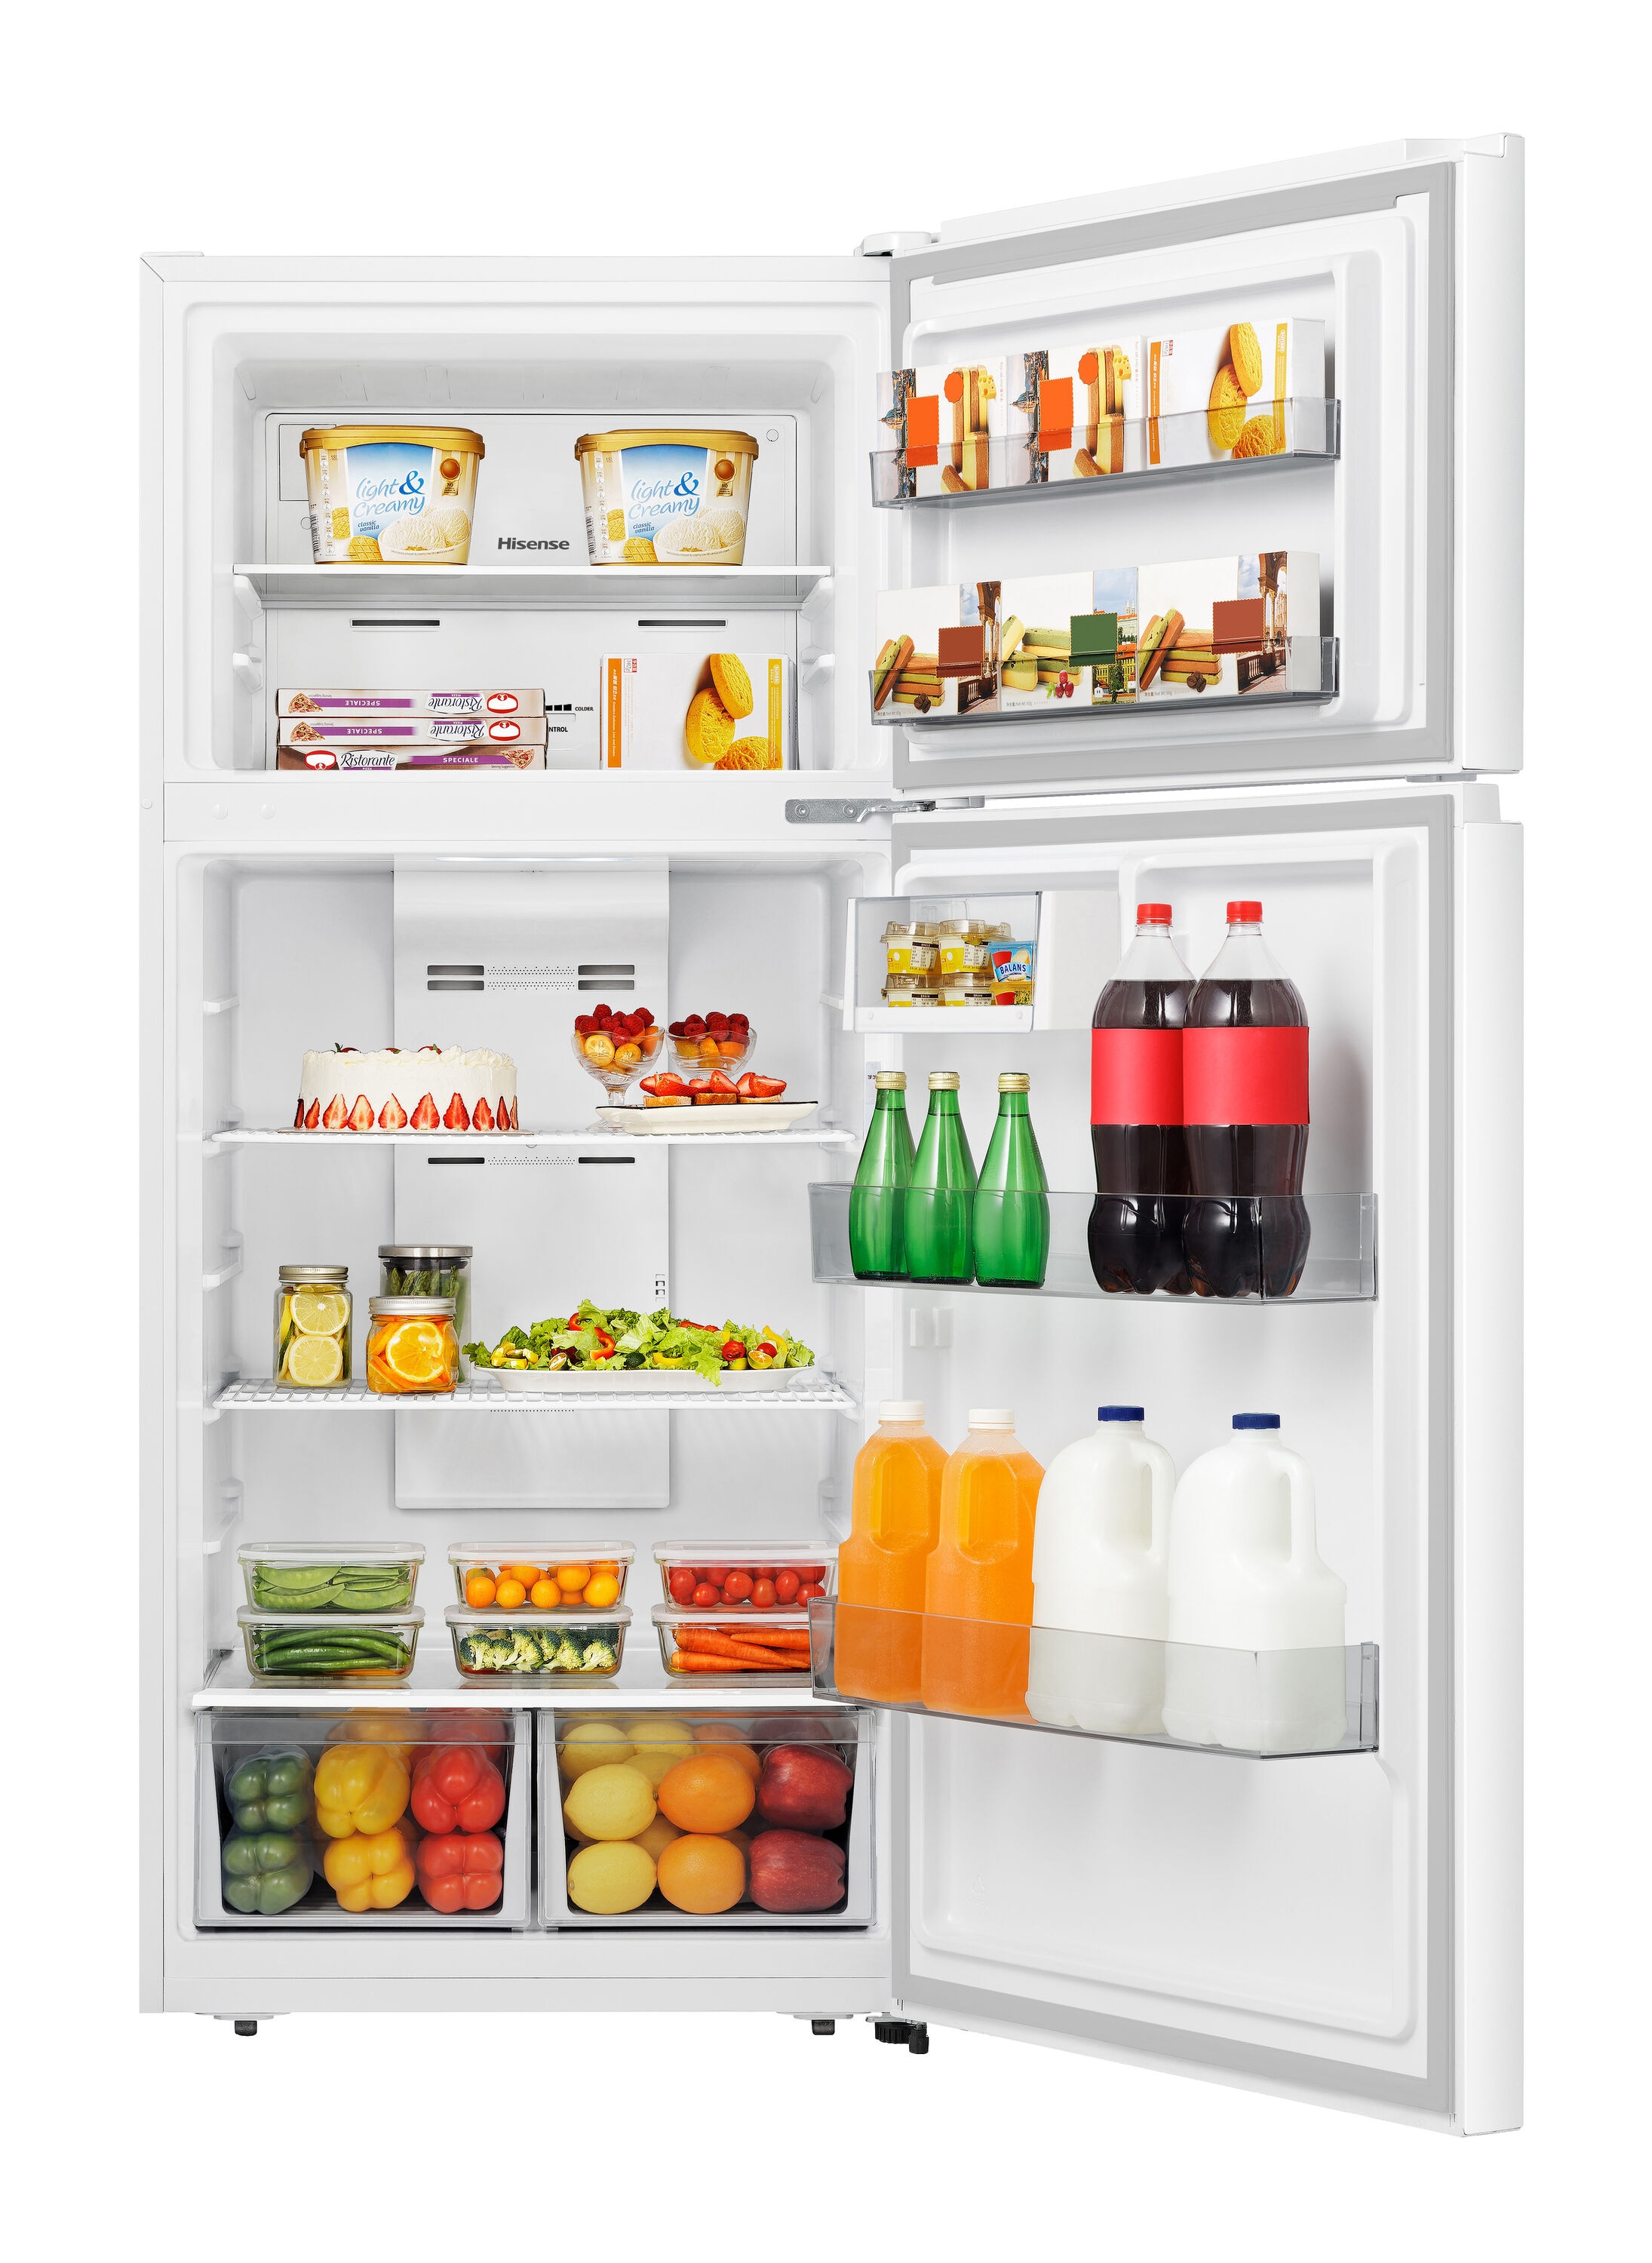 Hisense 18-cu ft Top-Freezer Refrigerator (White) in the Top 